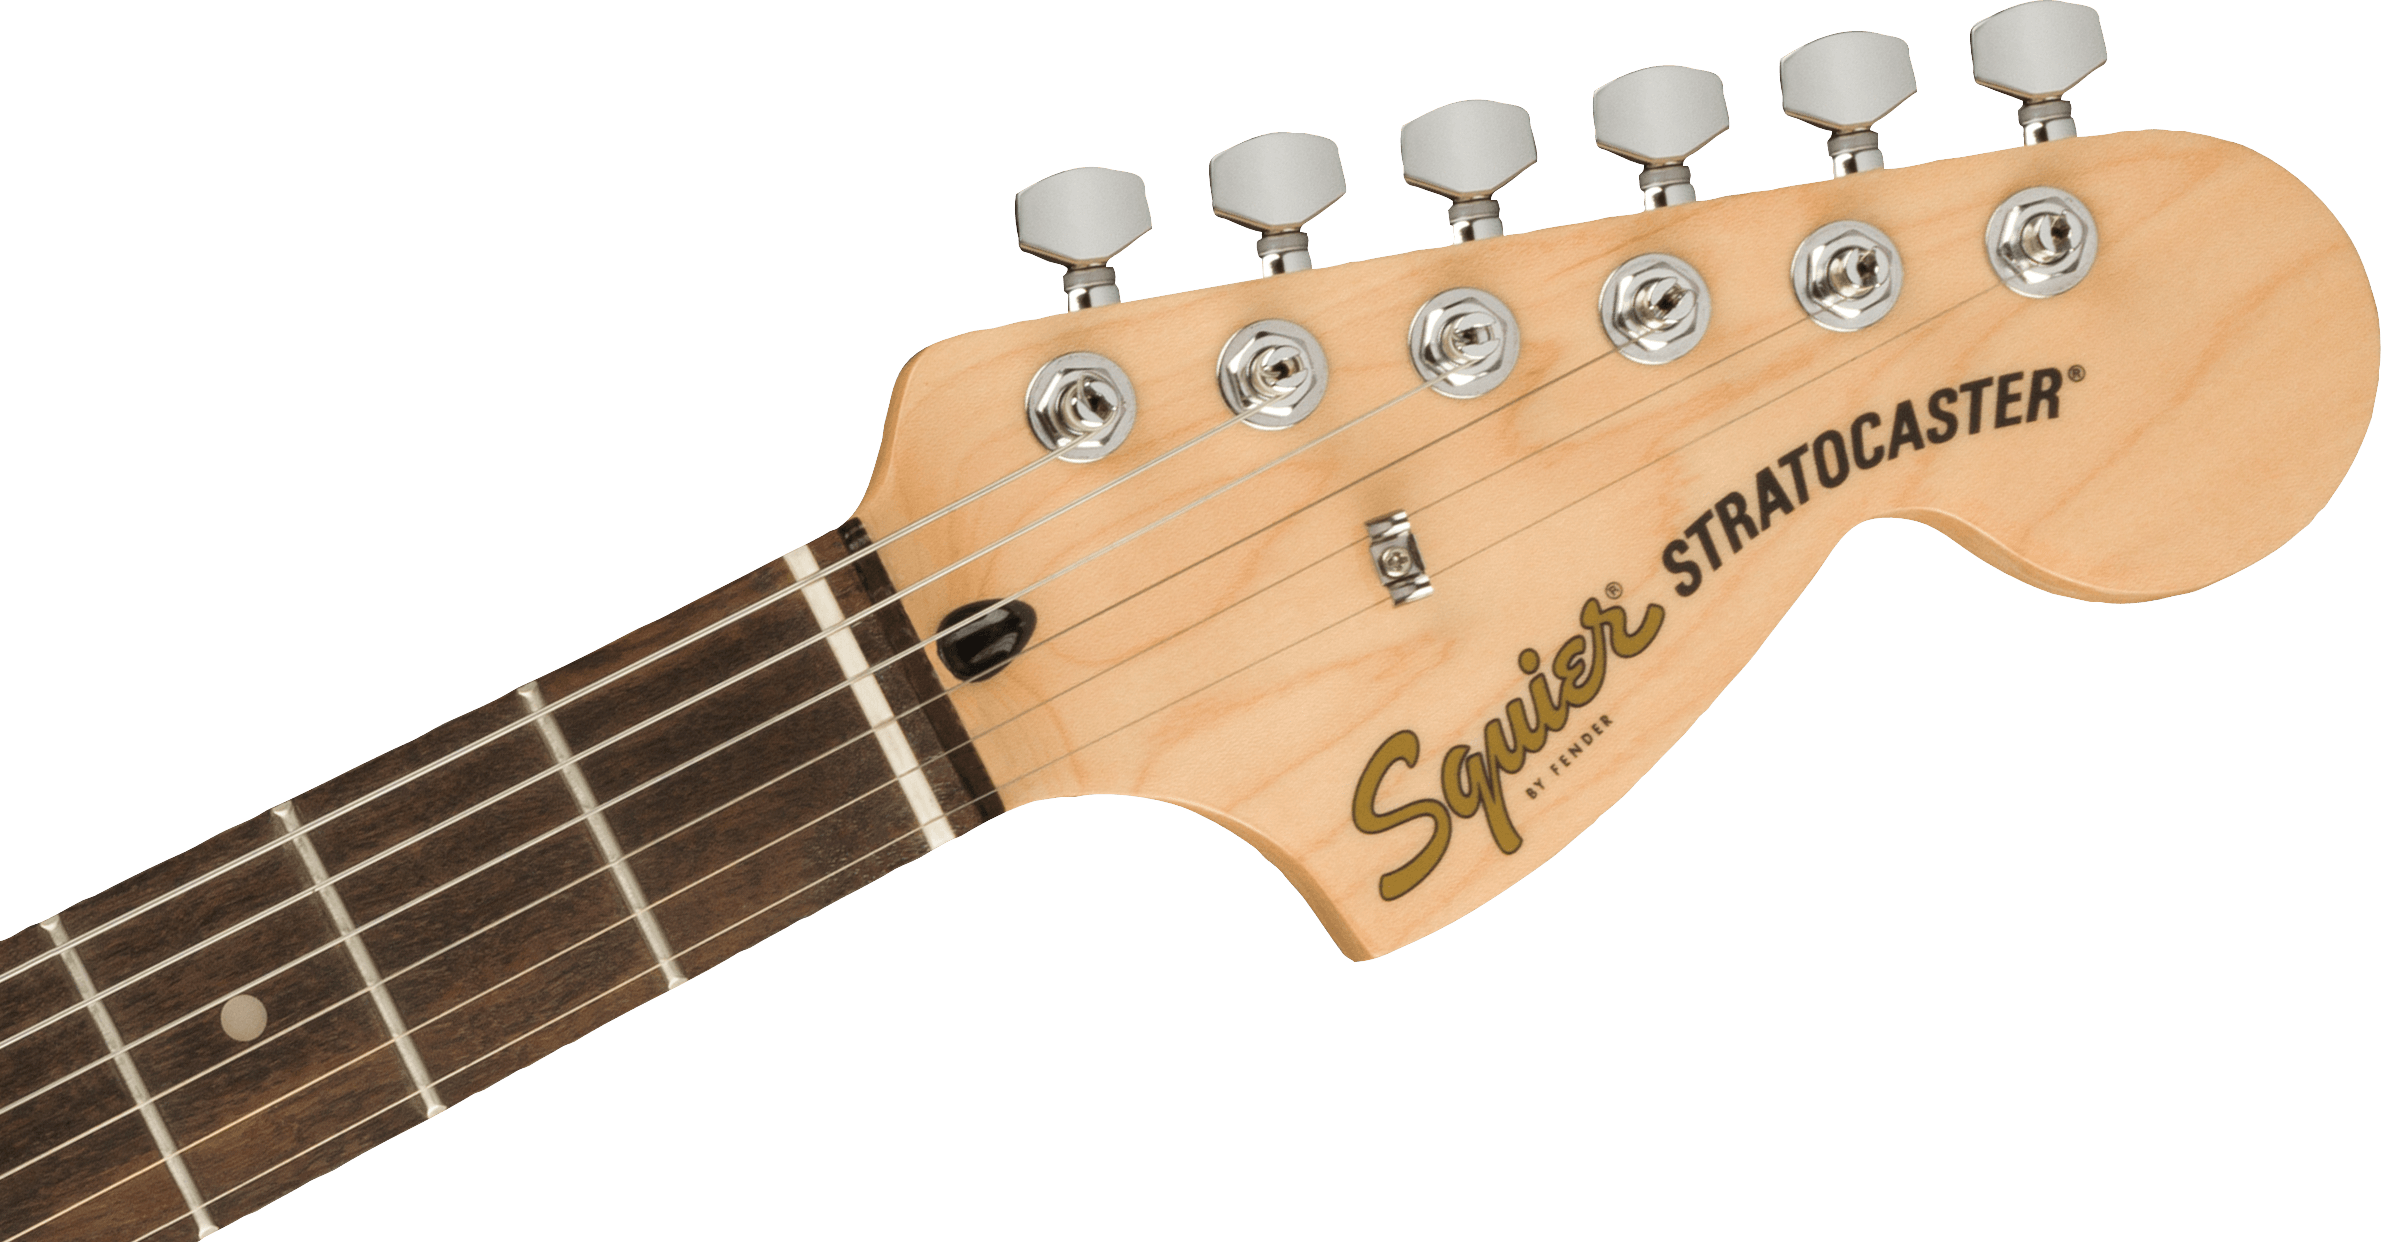 Squier FSR Affinity Series™ Stratocaster®, Laurel Fingerboard, White Pearloid Pickguard, Arctic White